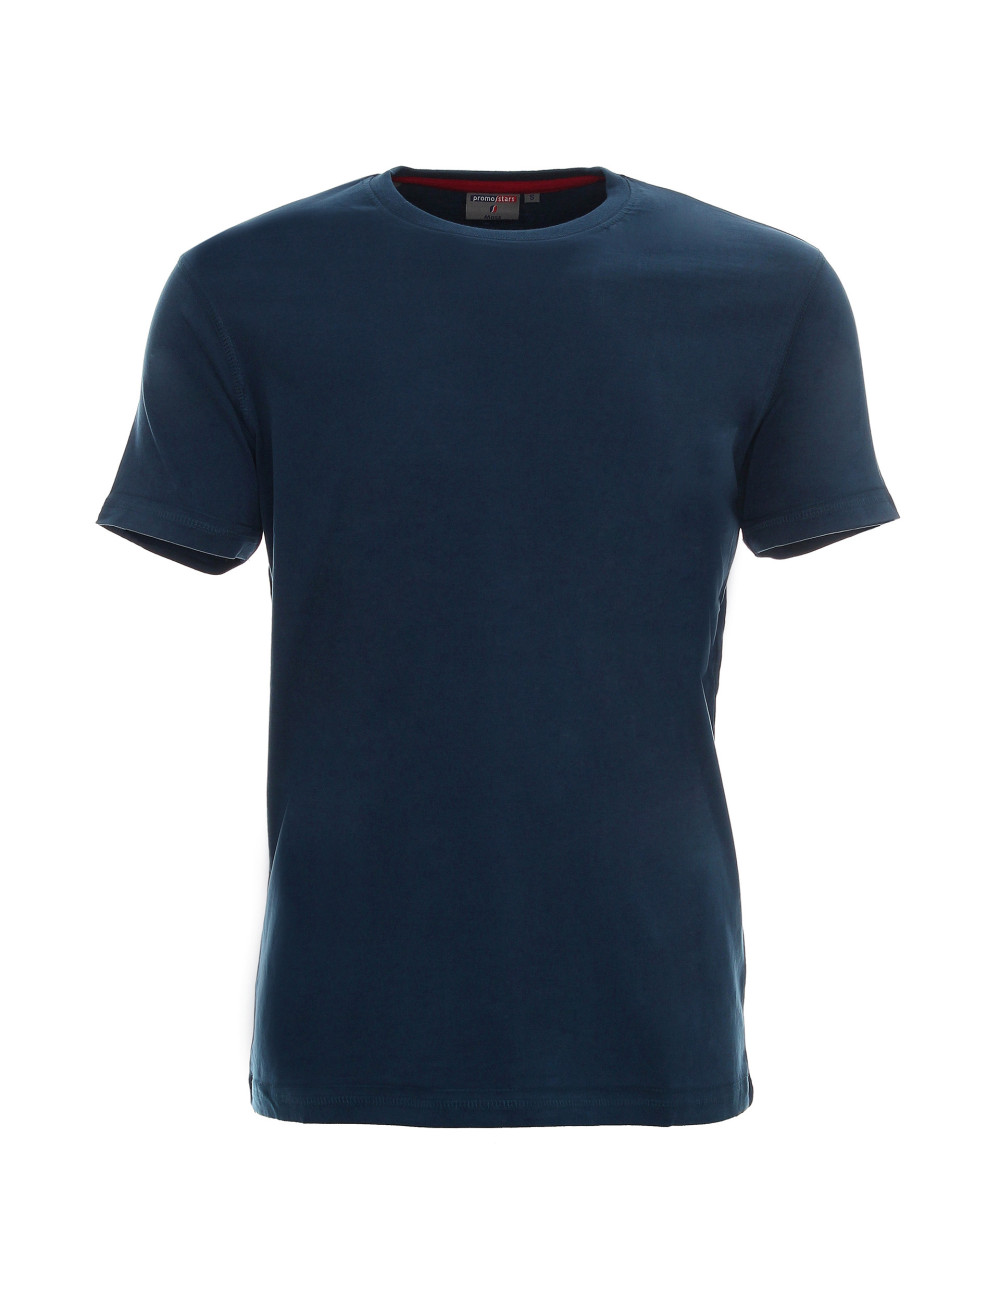 Moss Herren T-Shirt dunkelblau Promostars